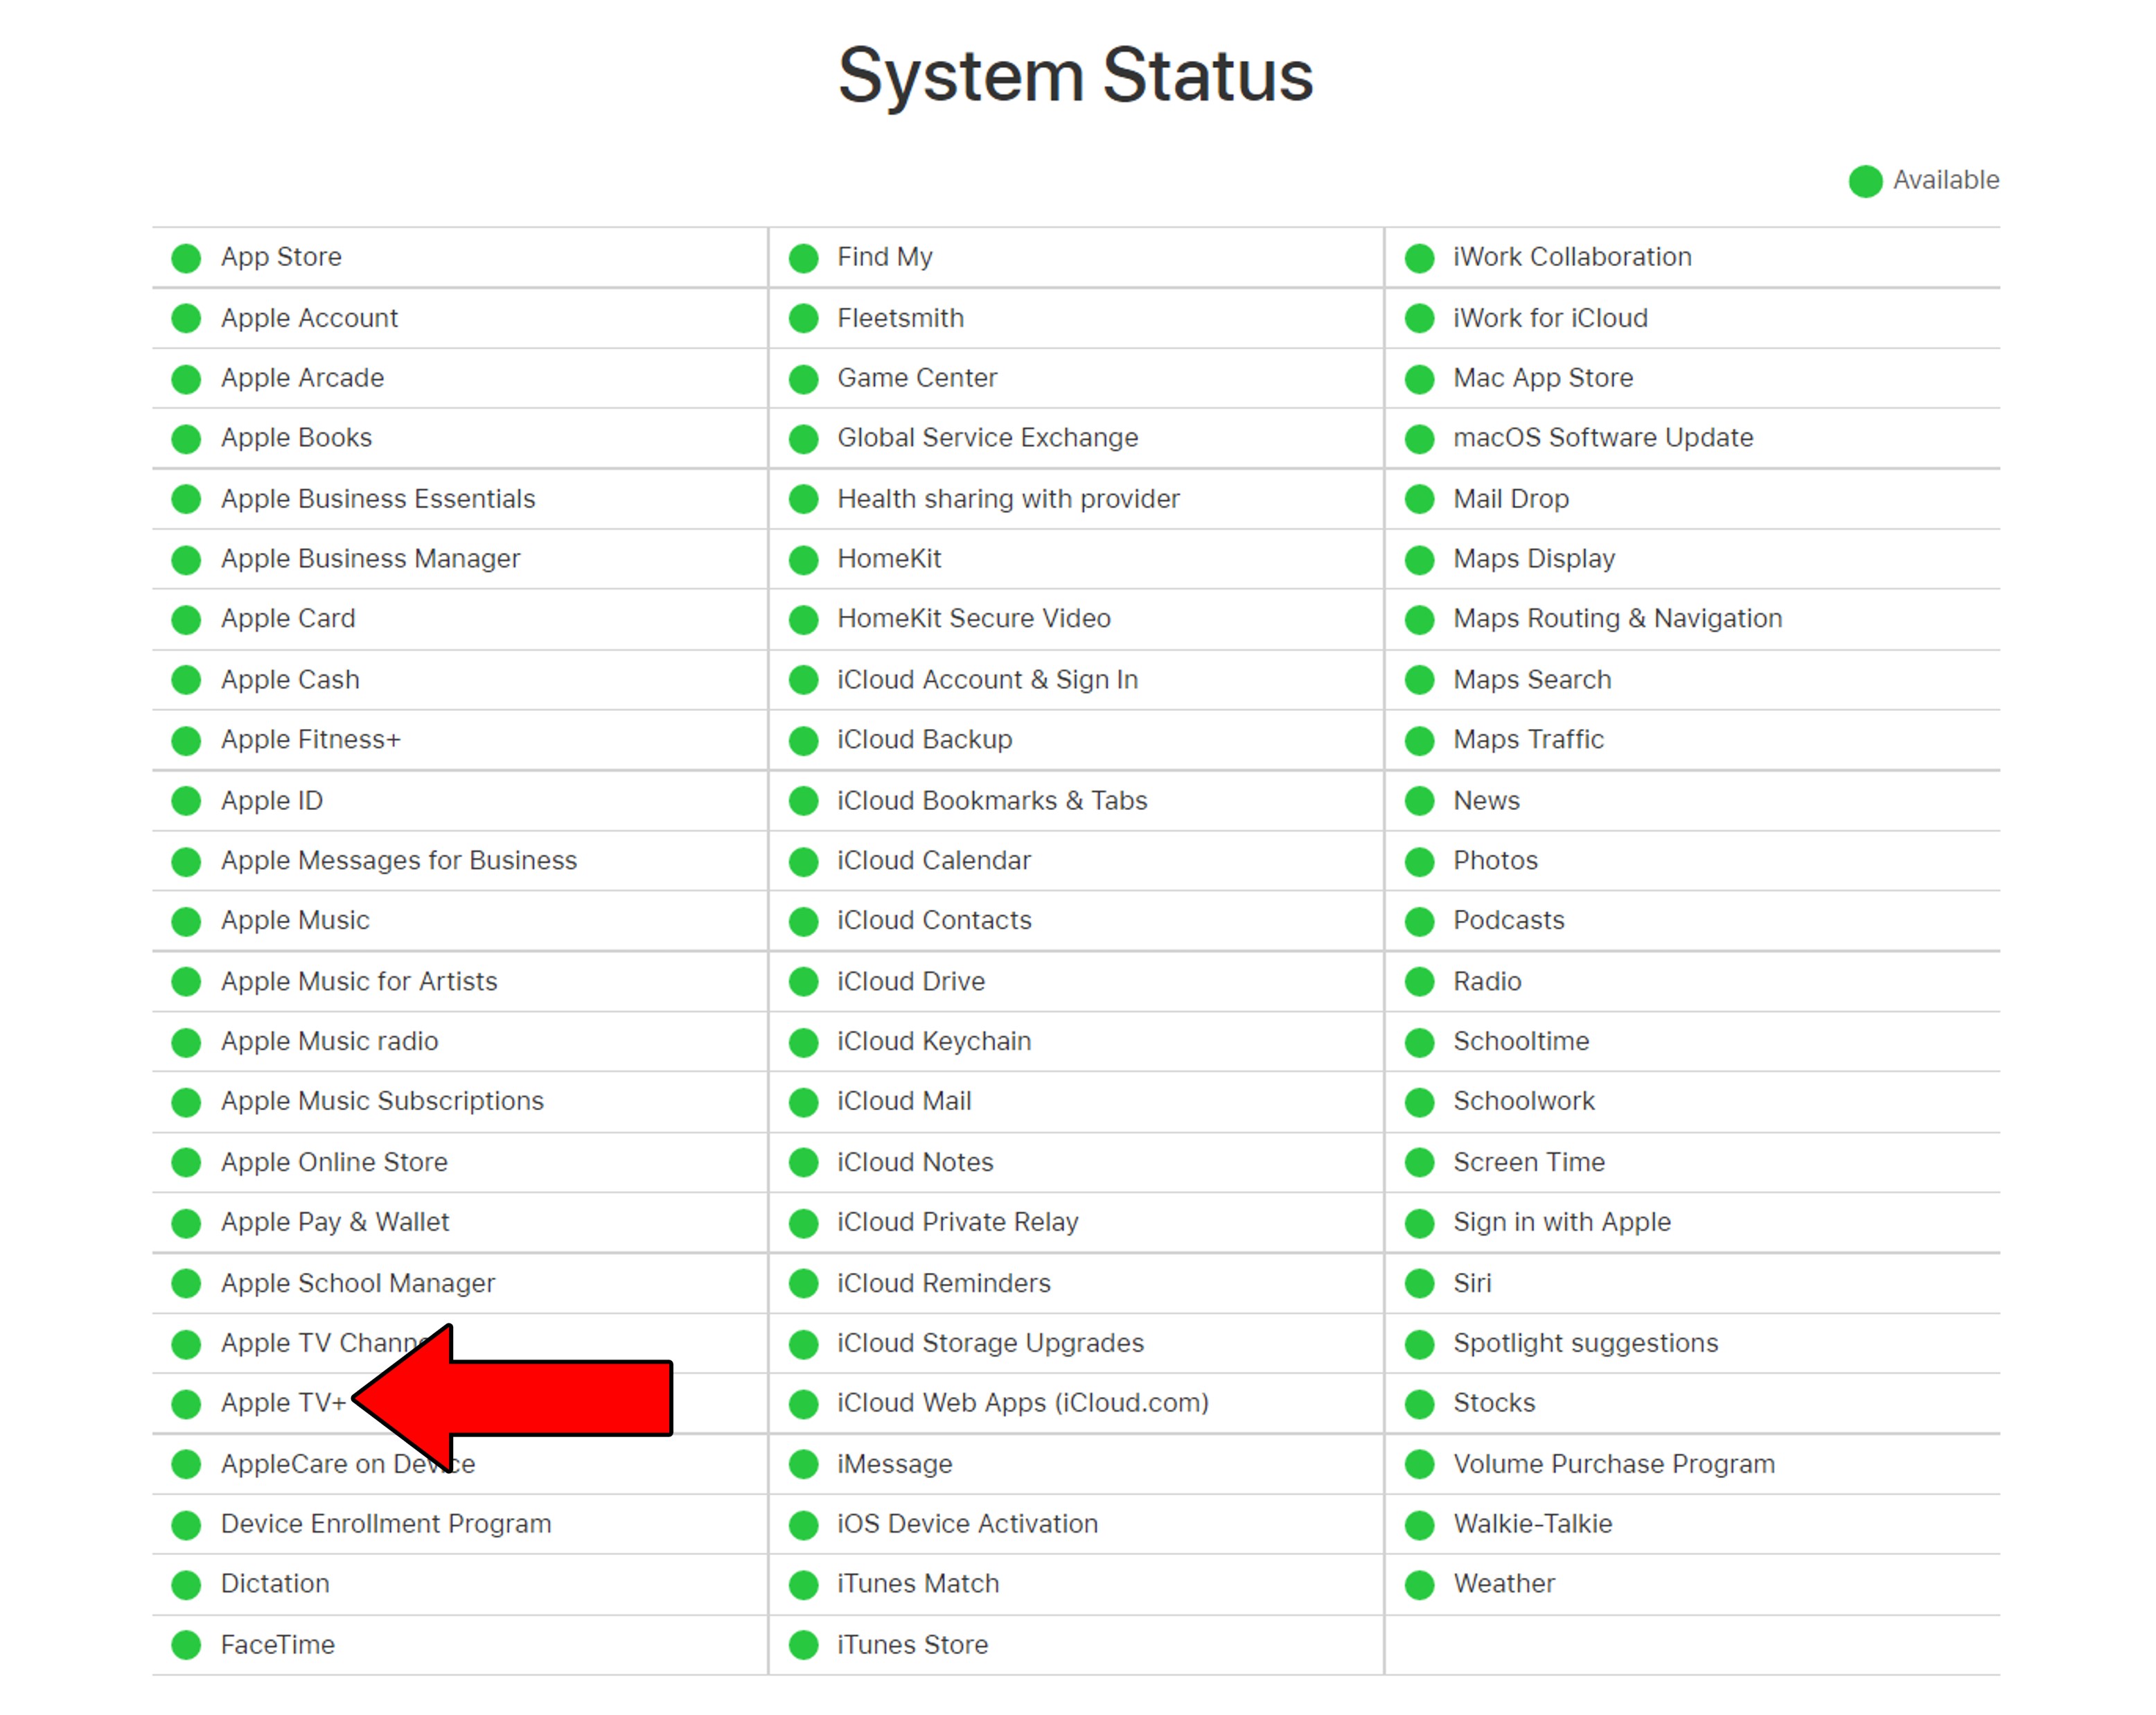 How to check Apple TV's server status on Apple's website